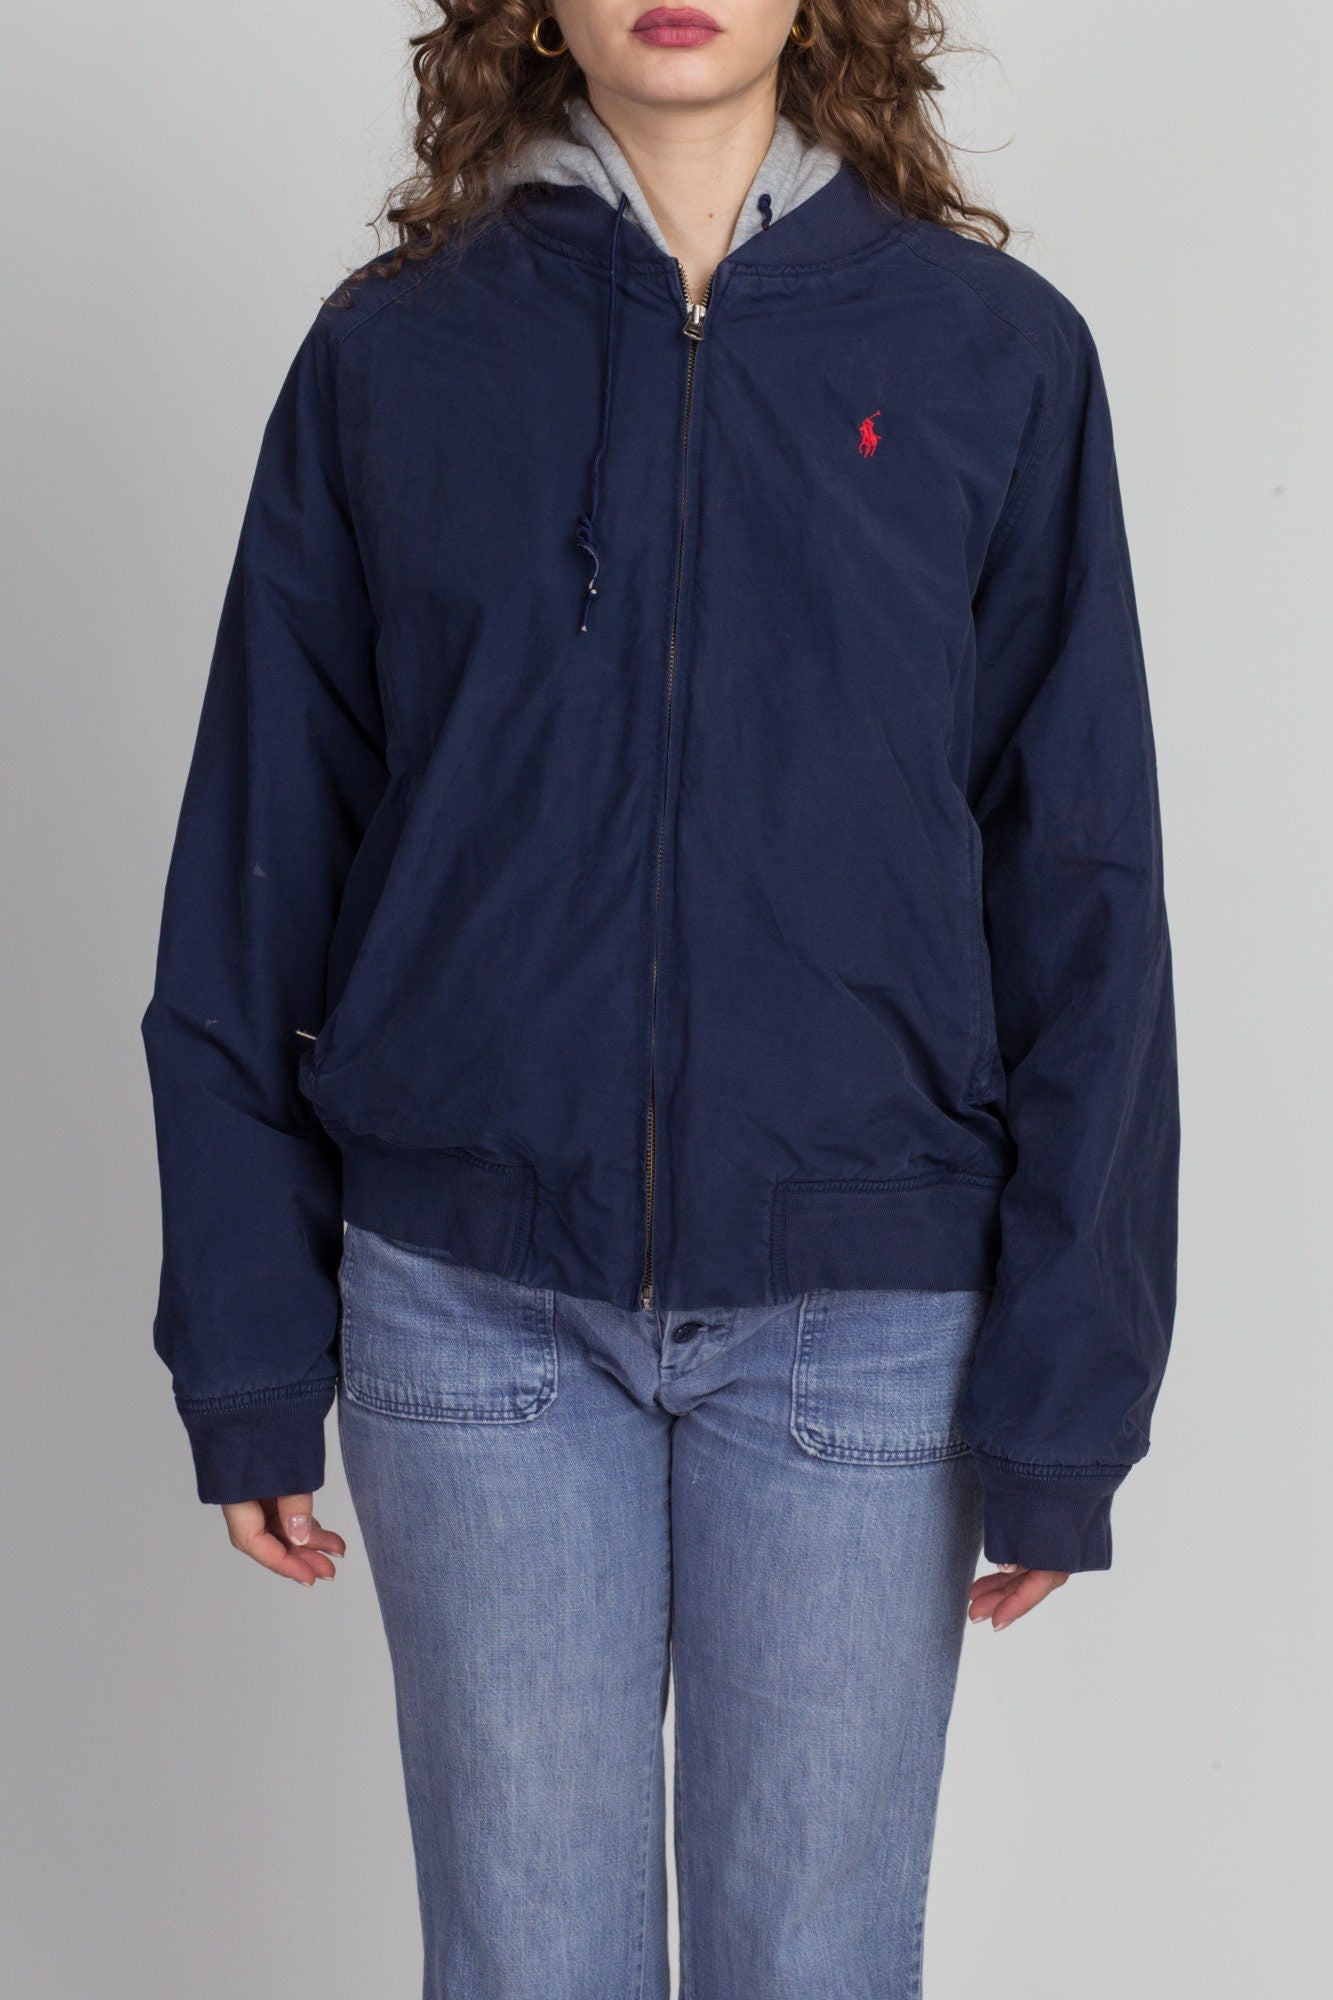 90s Polo Ralph Lauren Hooded Jacket - Men's Large, Women's XL ...